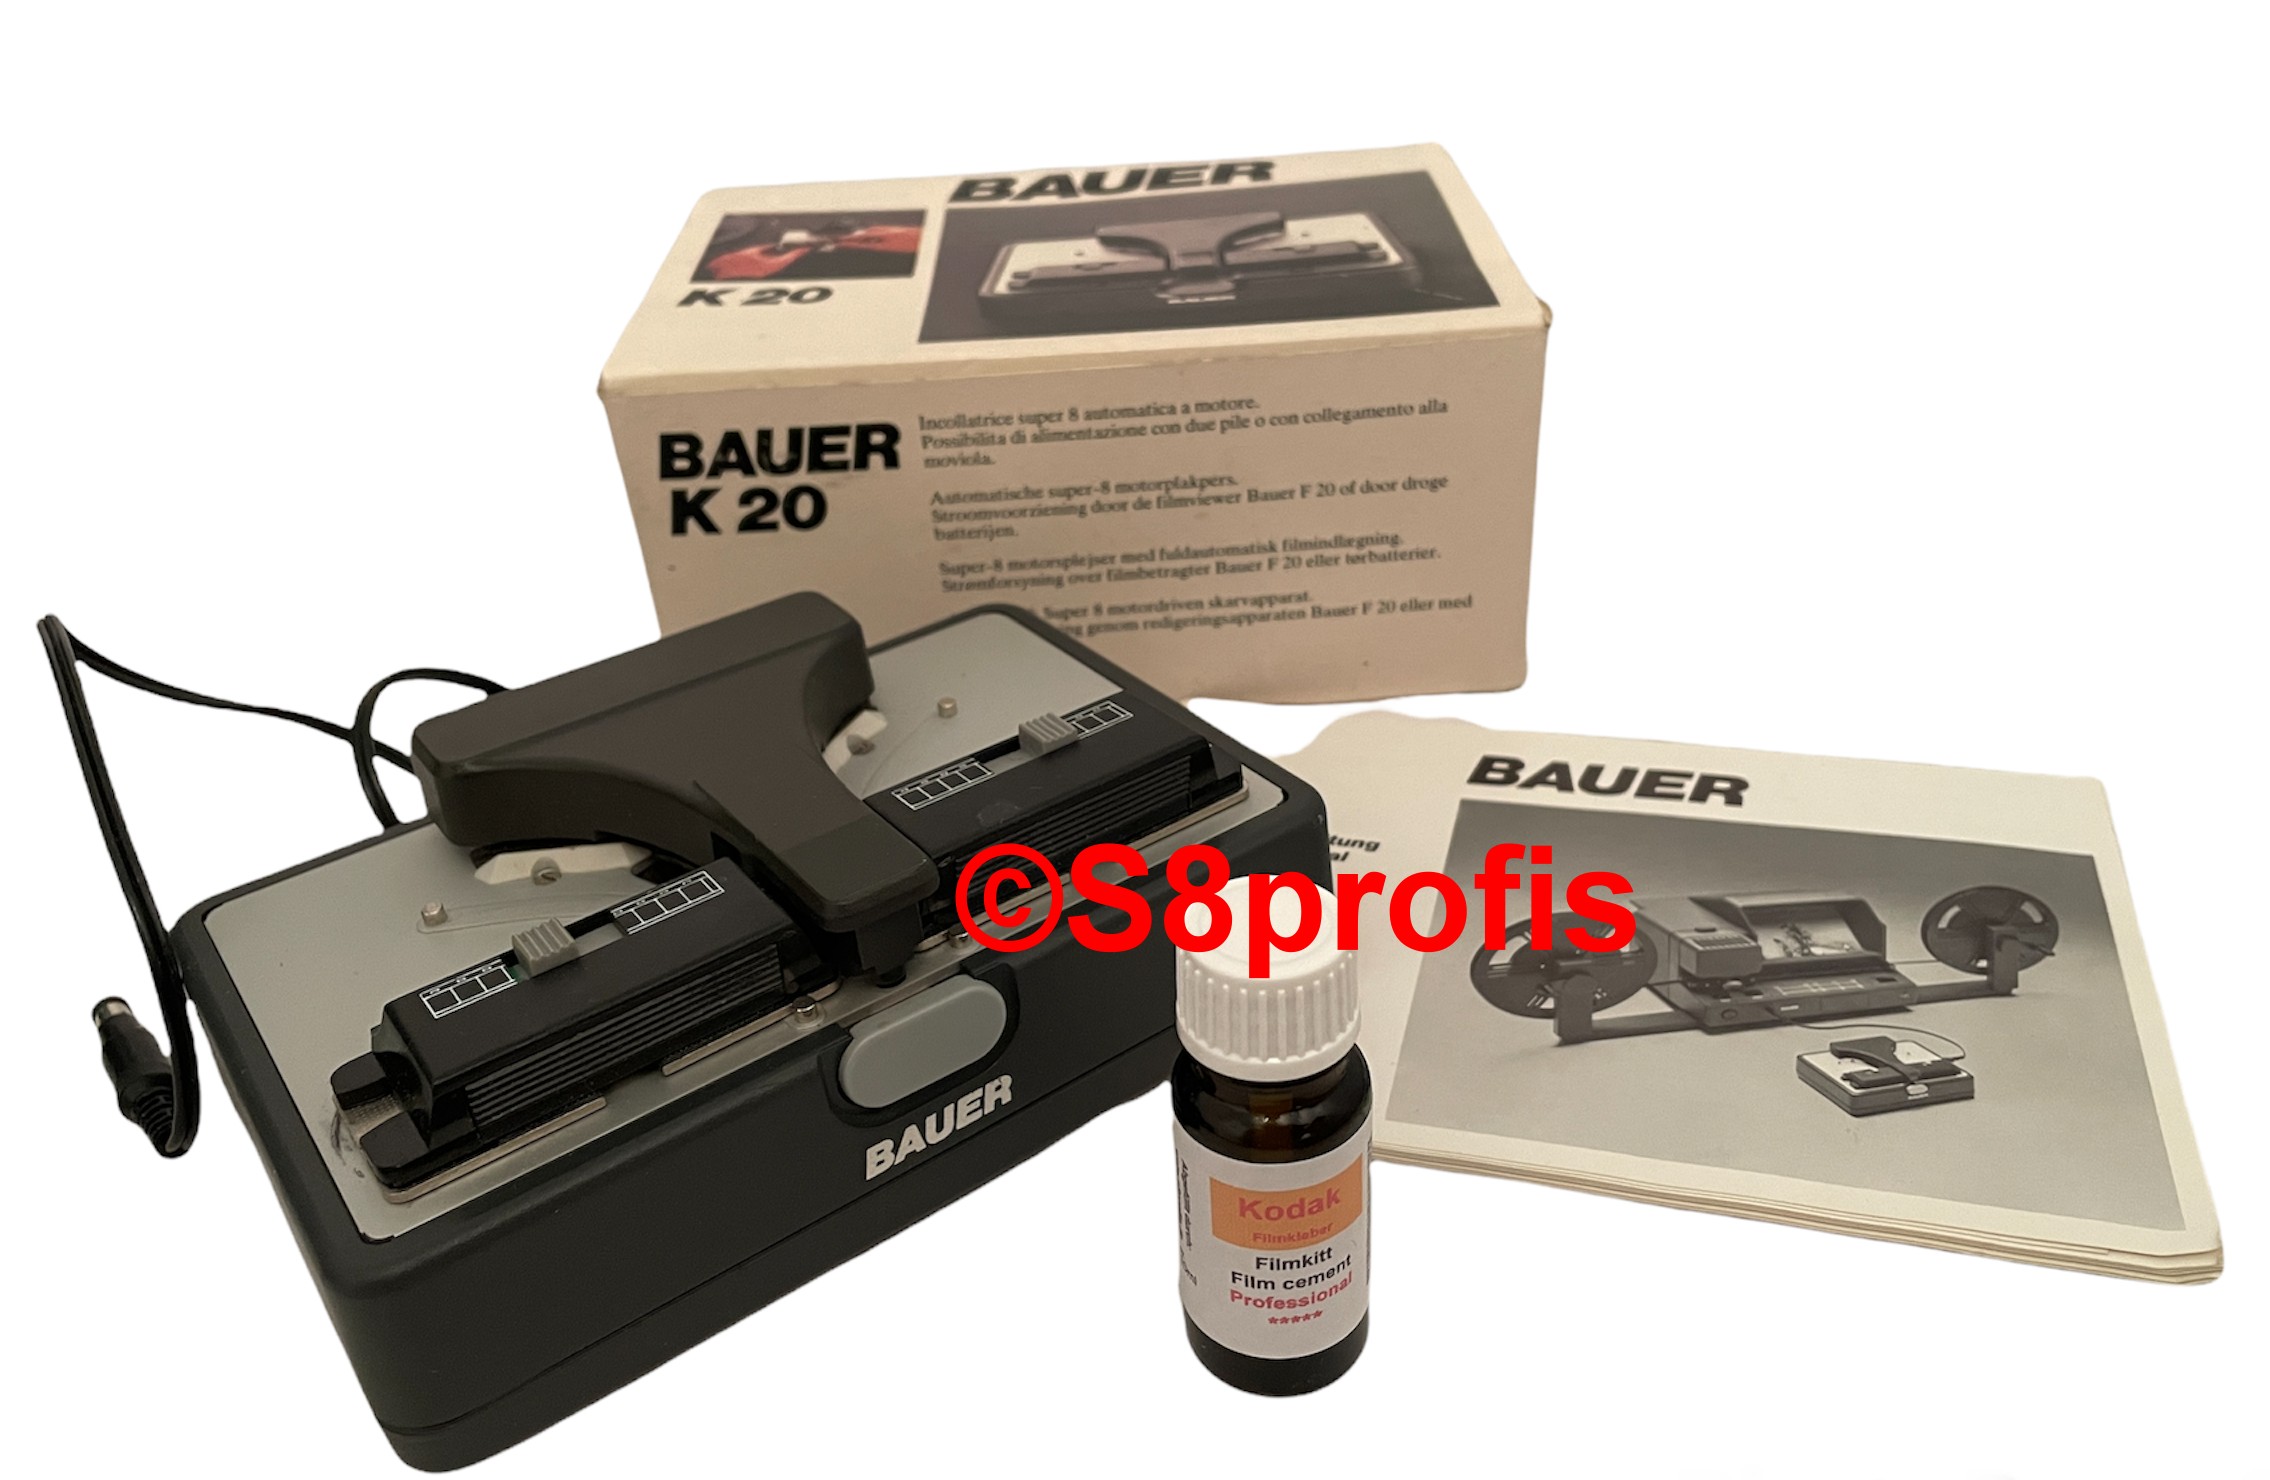 Bolex 8mm/Super 8mm Film Splicer In Box + Instructions - Nice!